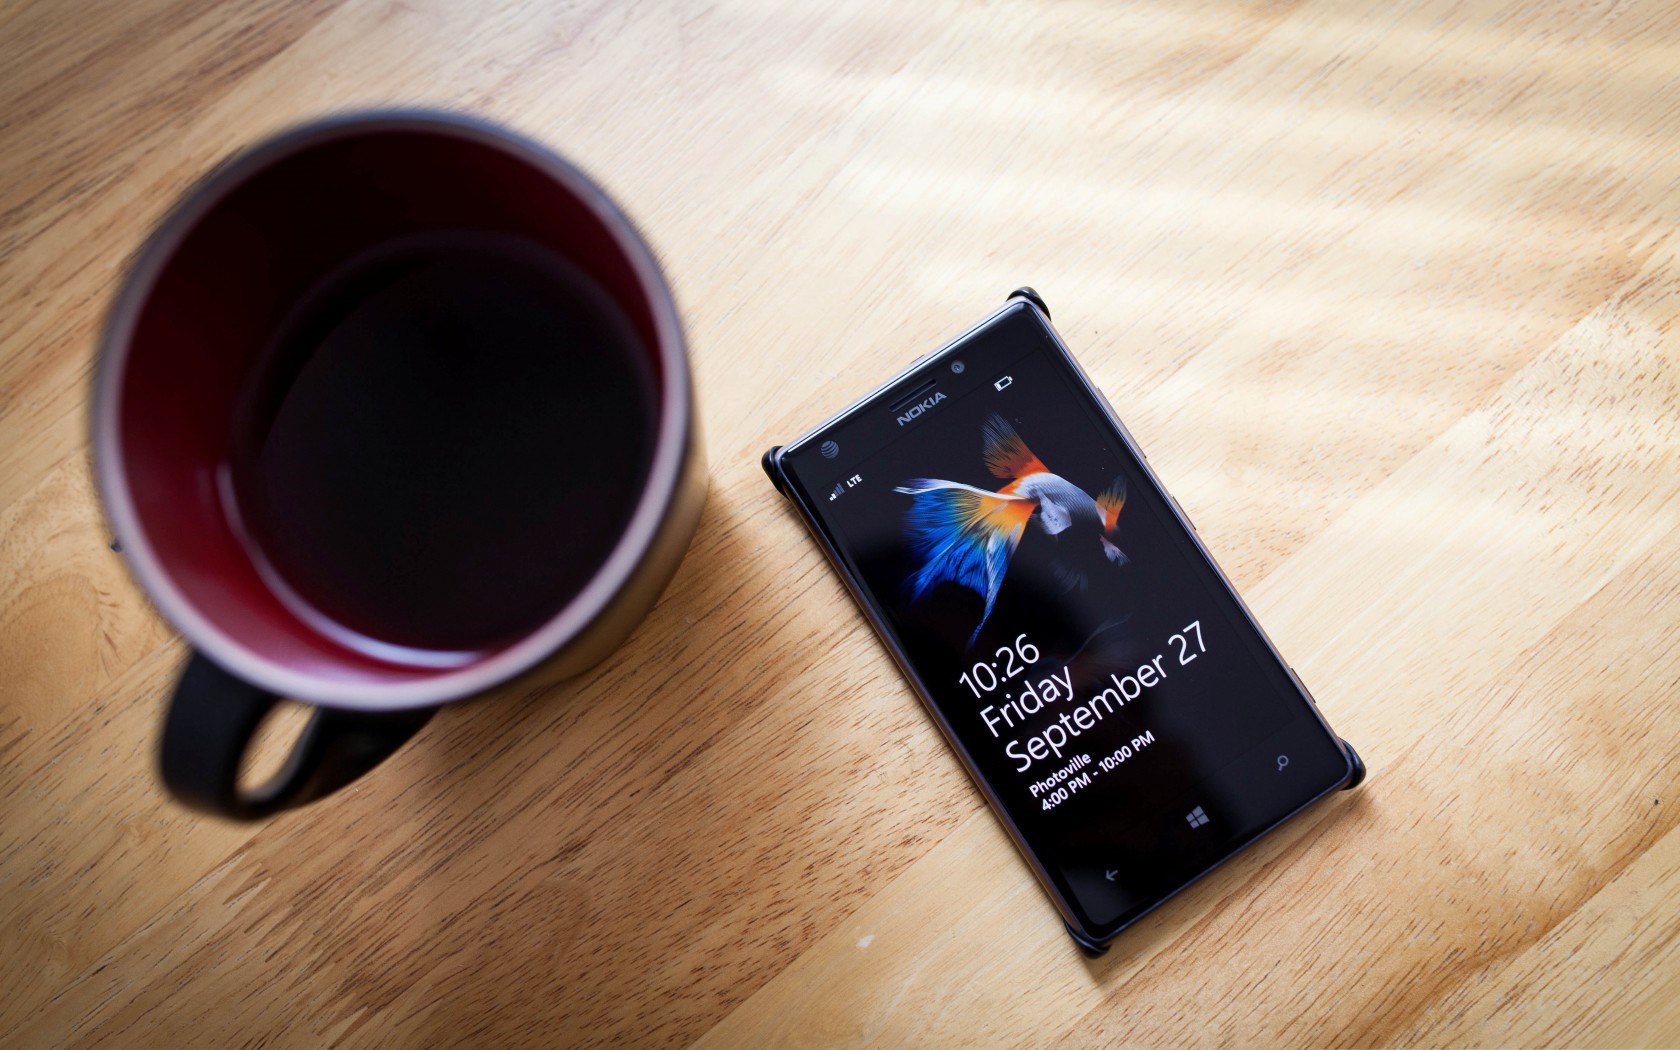 Nokia Lumia 925 Hi-Tech Cup